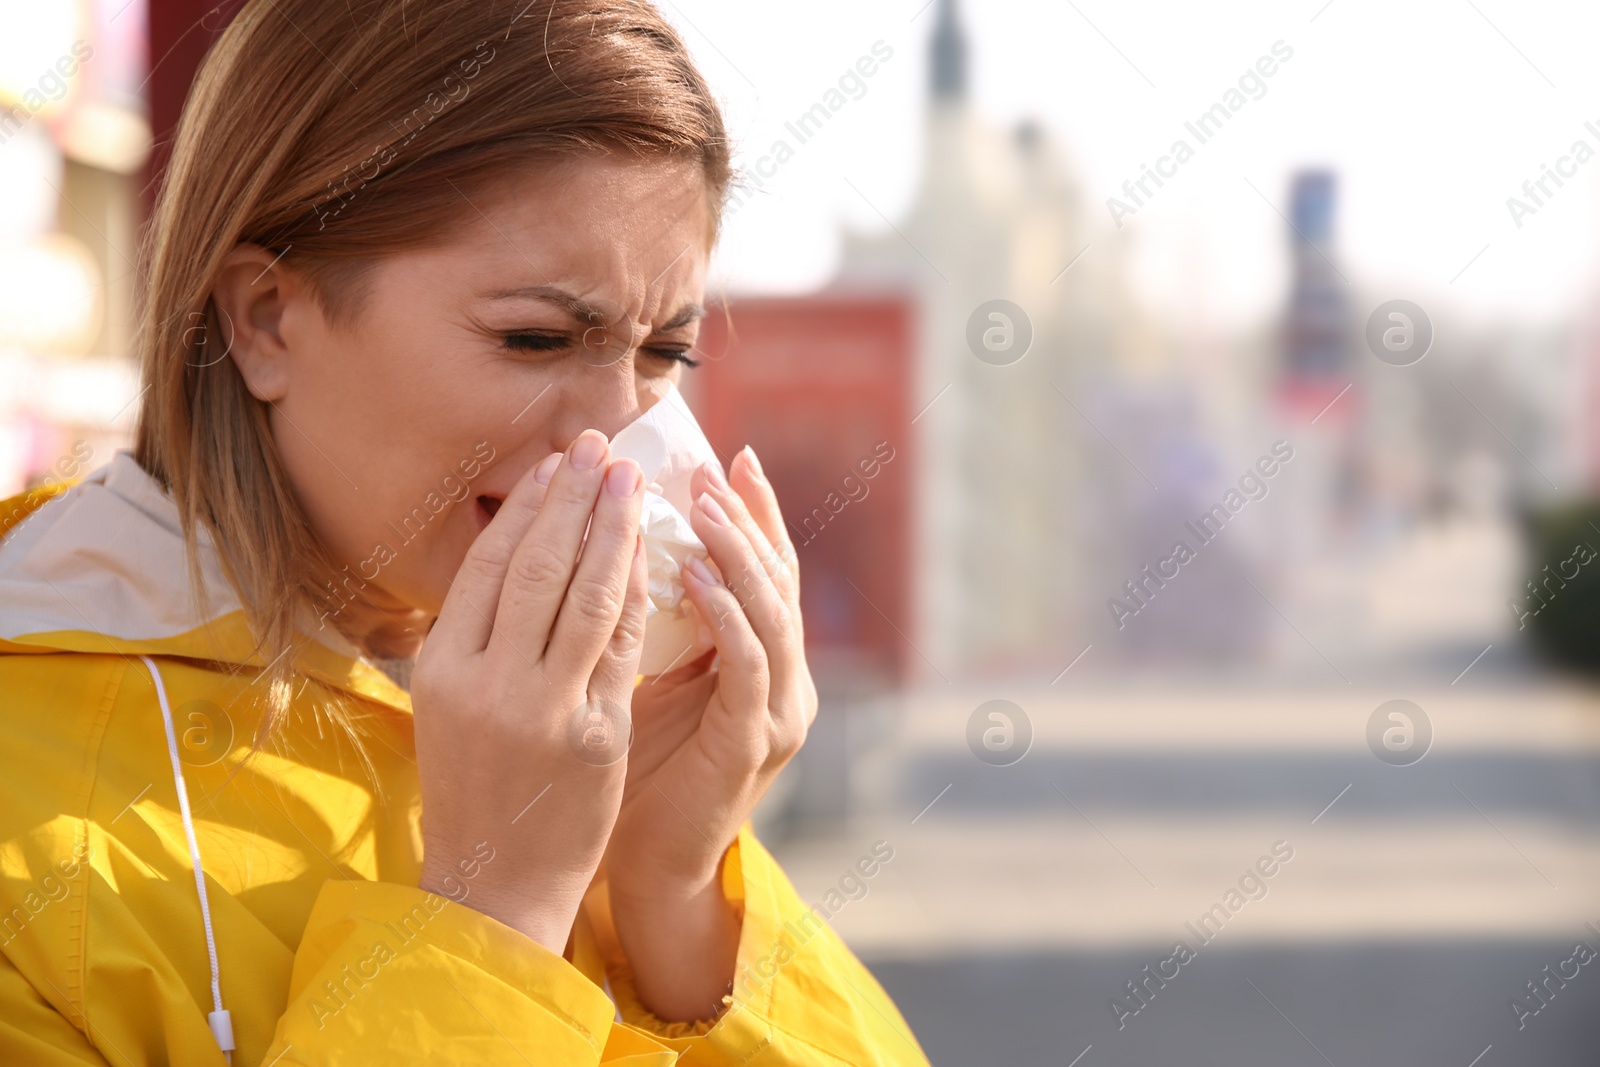 Photo of Sick woman sneezing on city street. Influenza virus